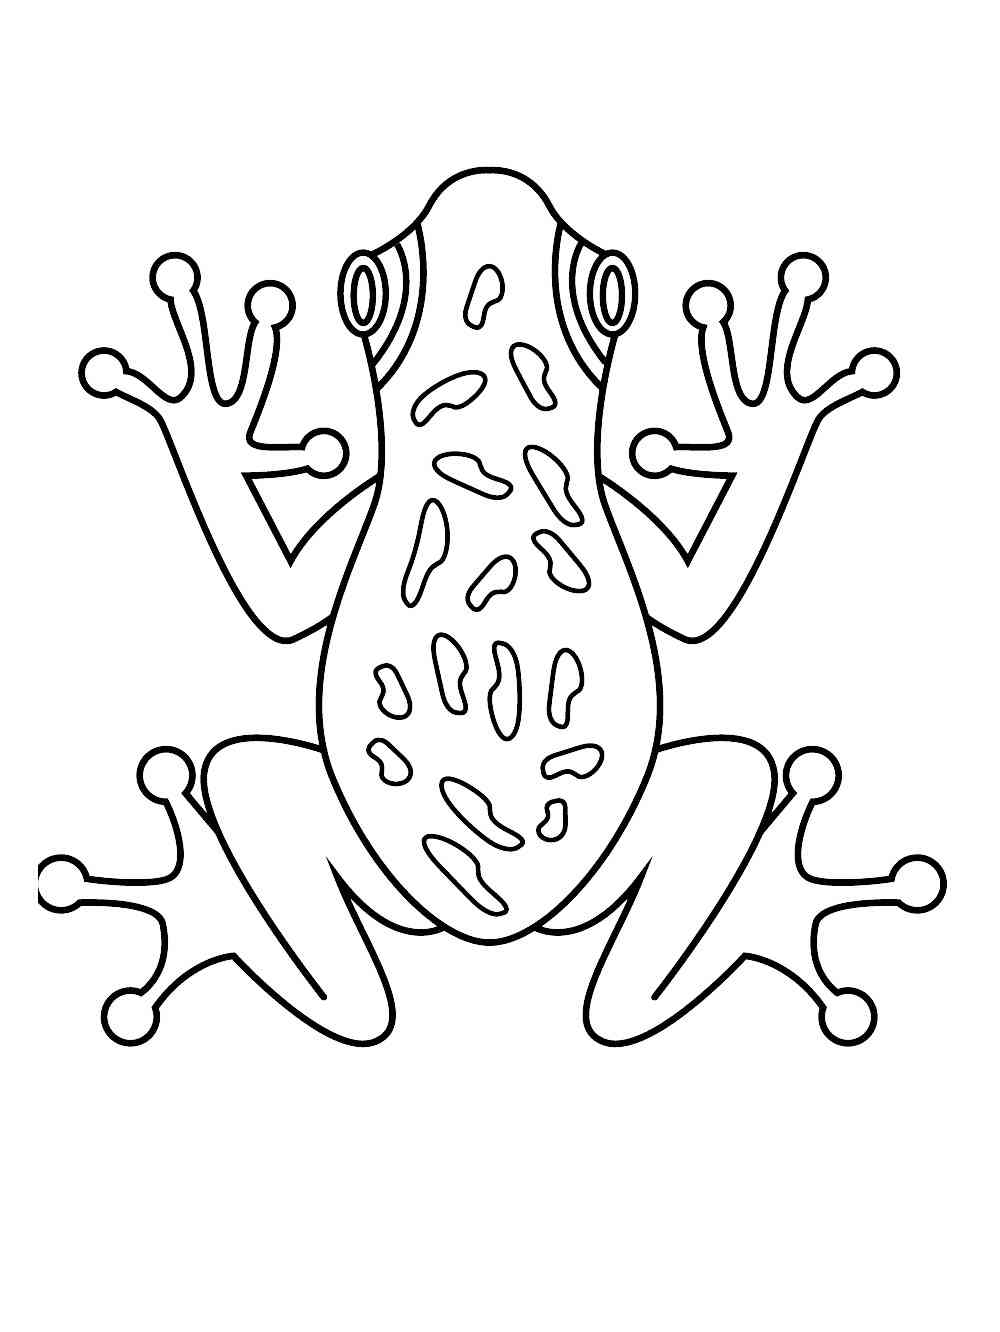 Amphibian 5 coloring page